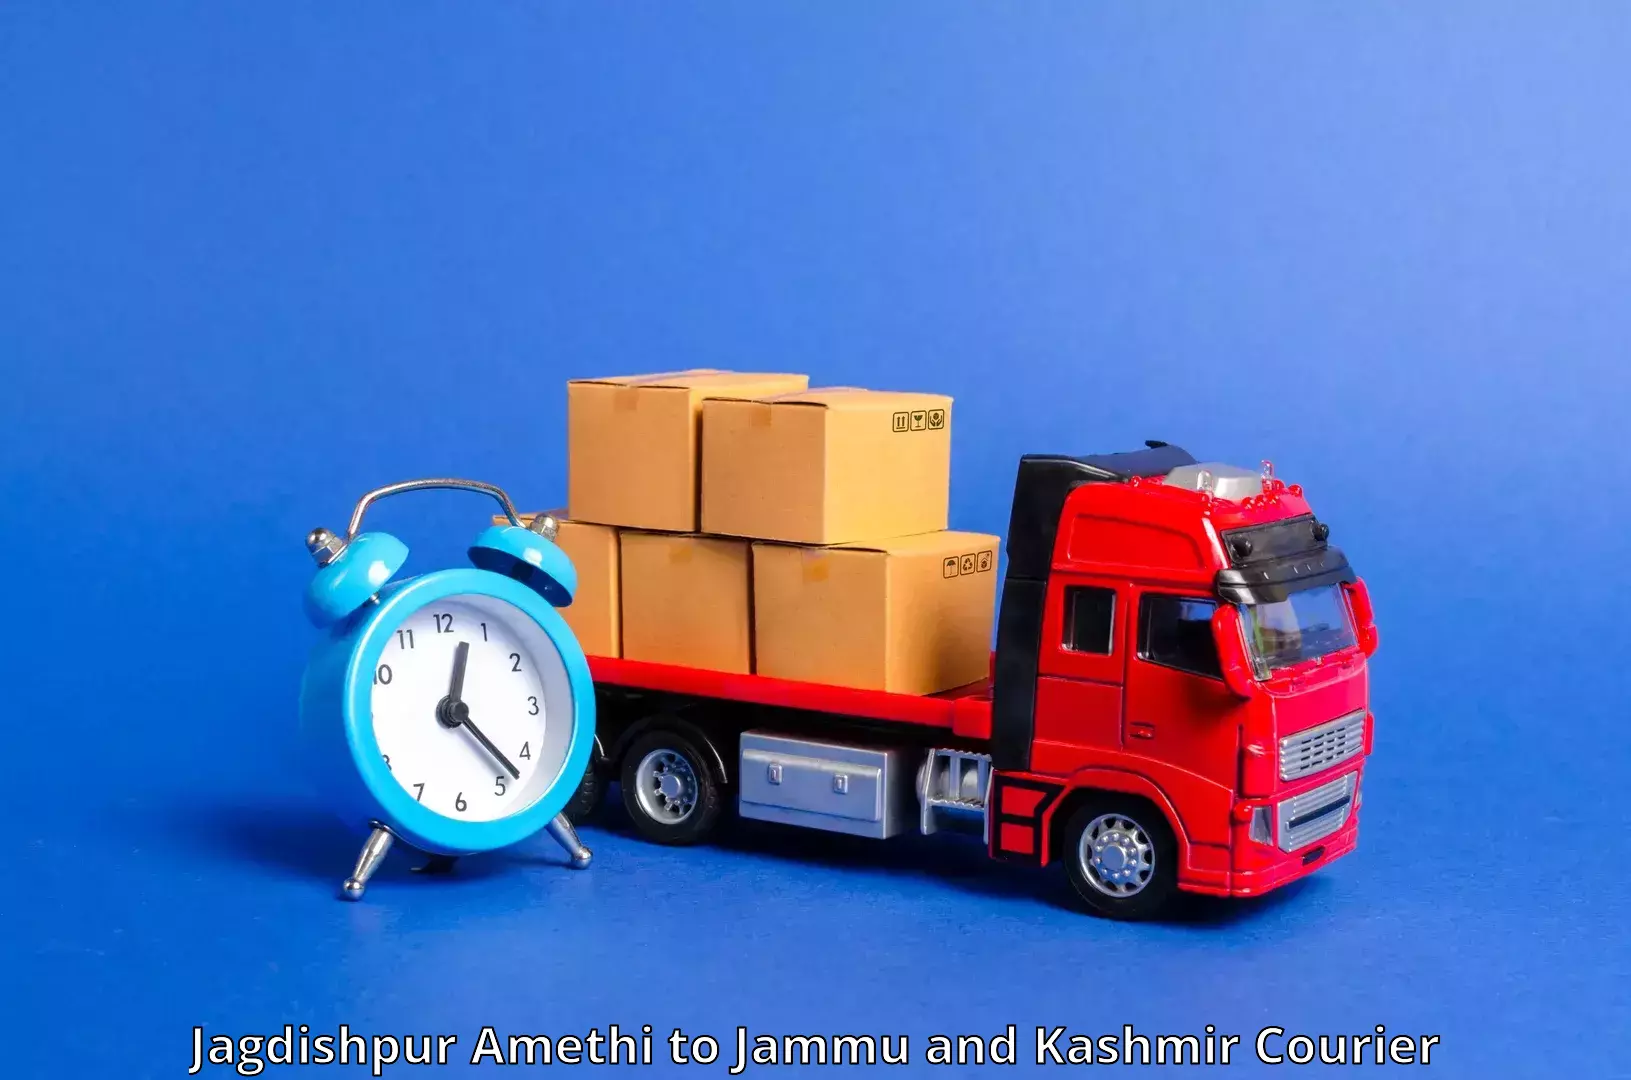 24/7 courier service Jagdishpur Amethi to Bhaderwah